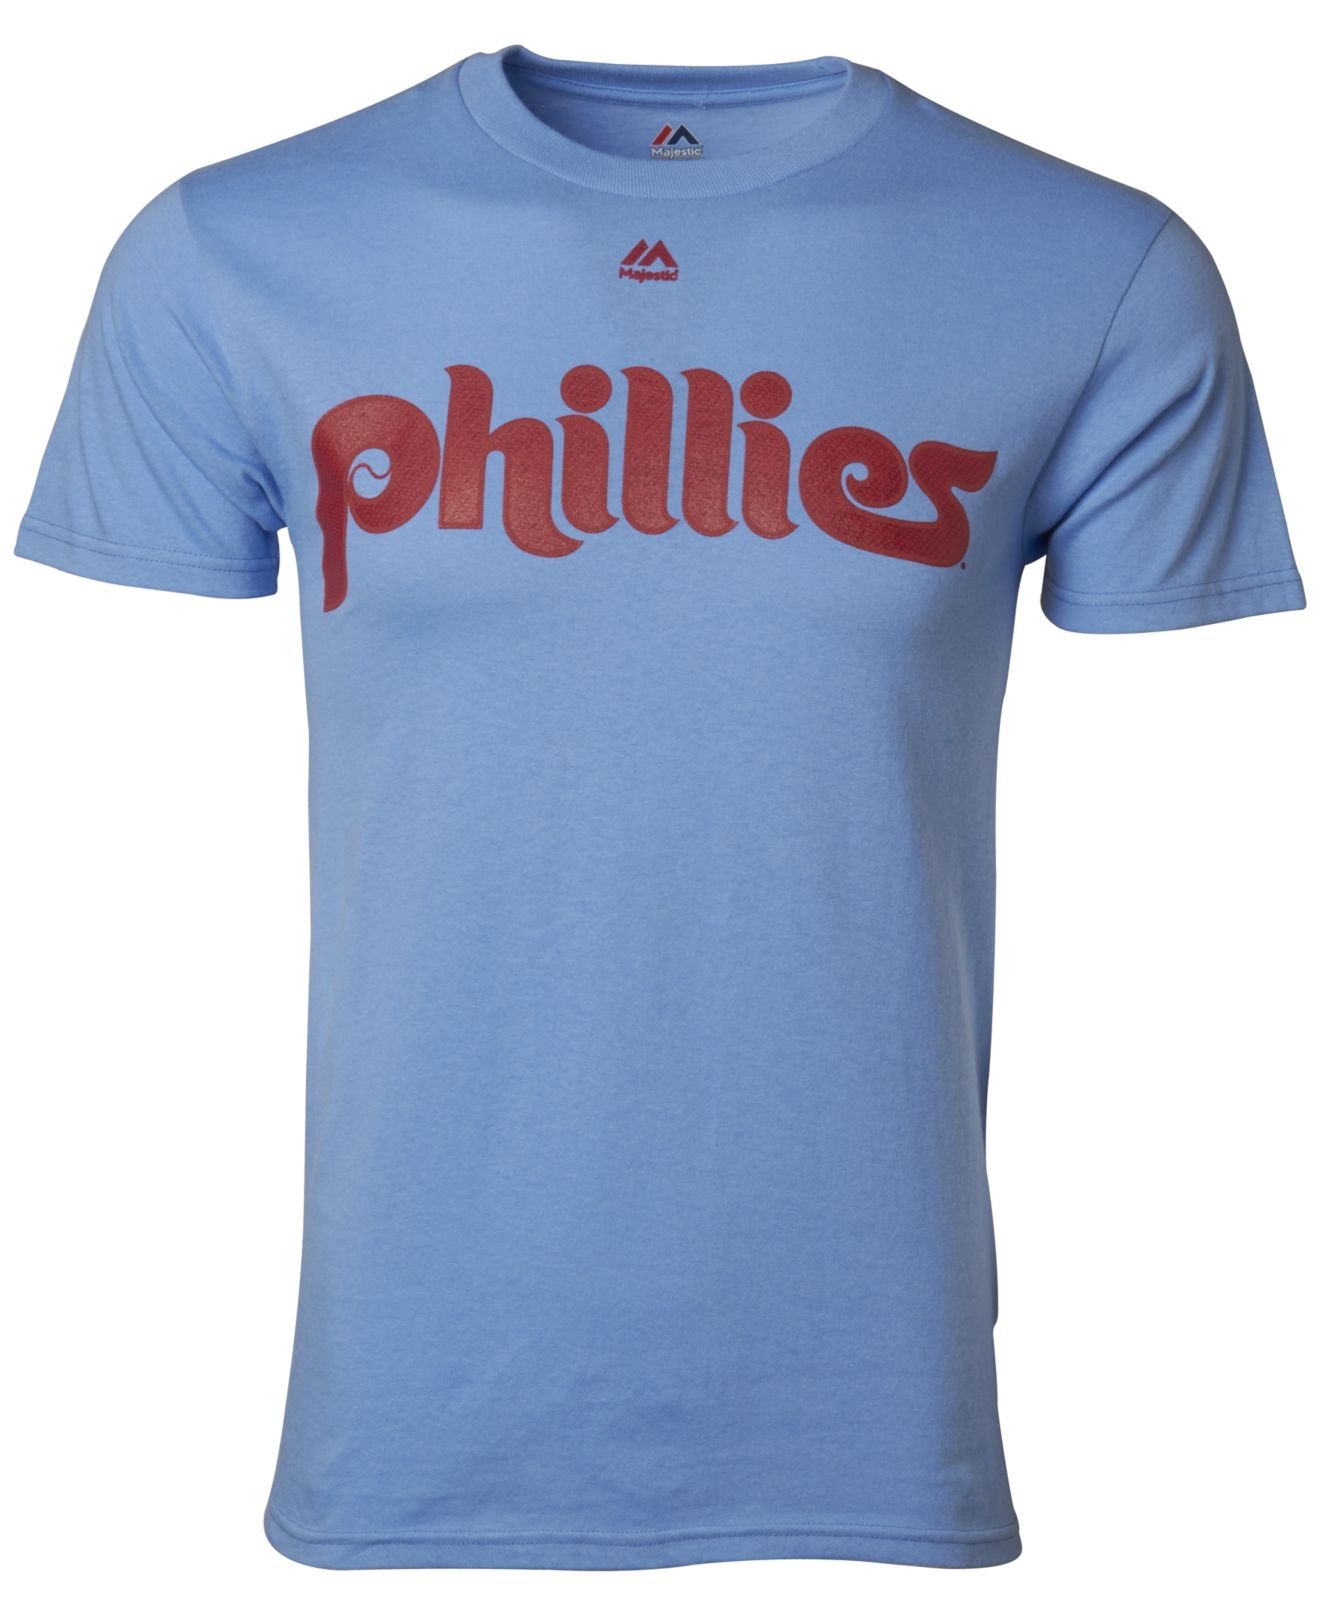 Majestic Men's Chase Utley Philadelphia Phillies Official Player T-shirt in  Blue for Men